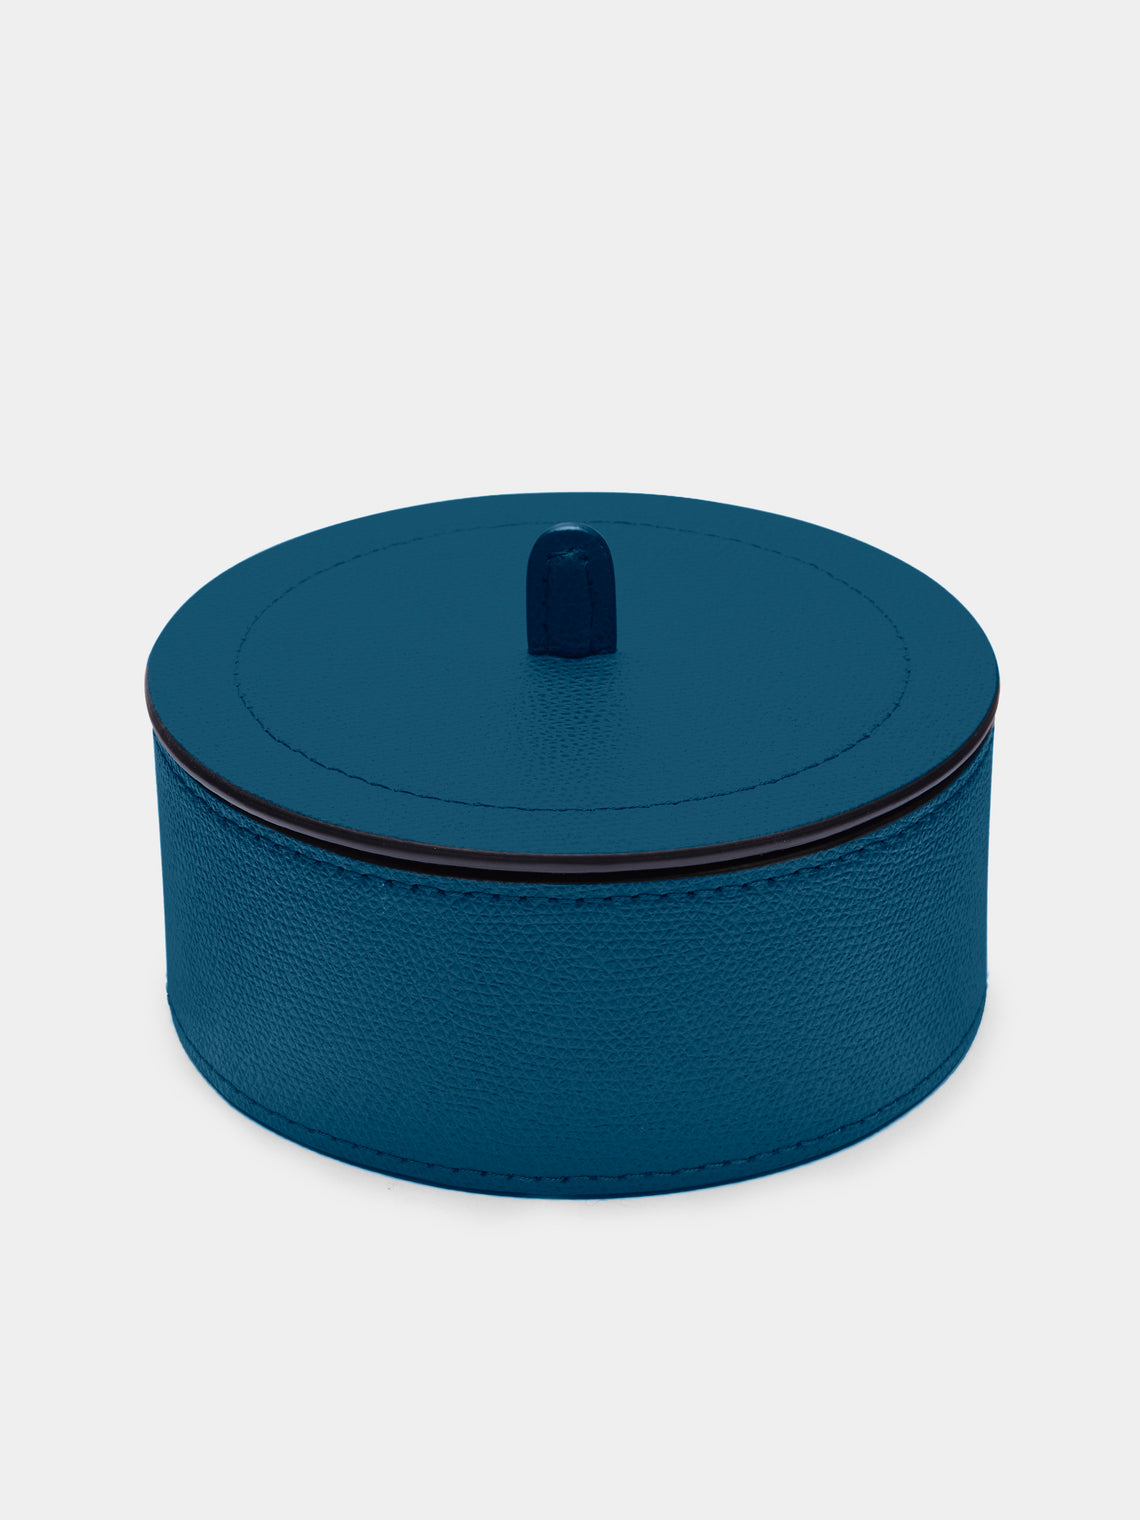 Giobagnara - Harris Leather Medium Trinket Box - Blue - ABASK - 